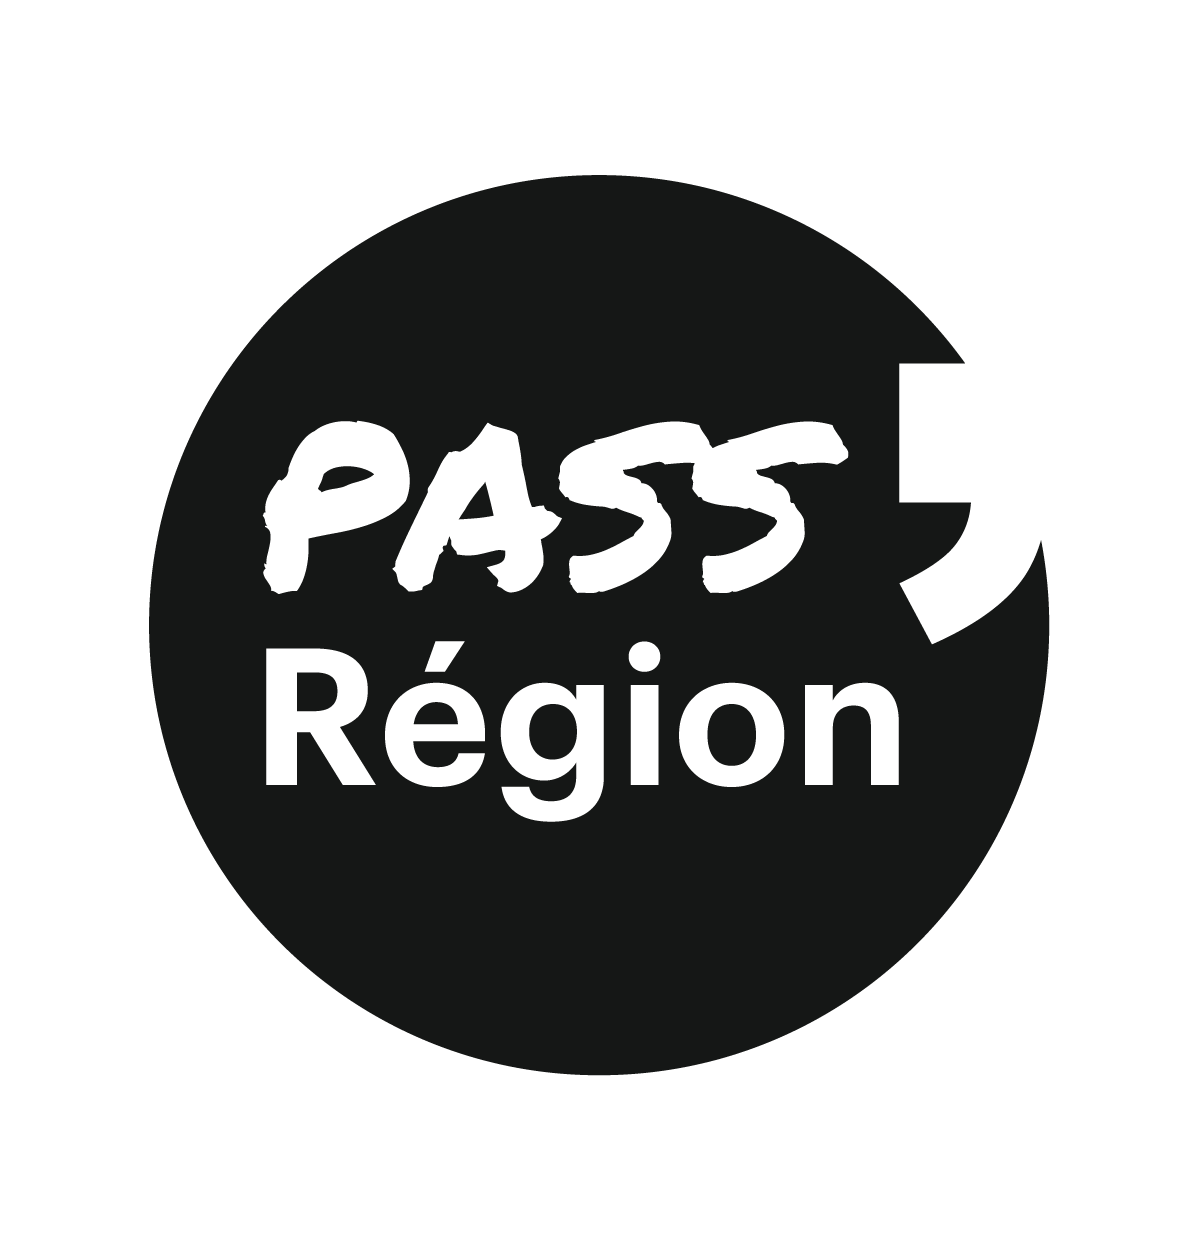 logo pass culture